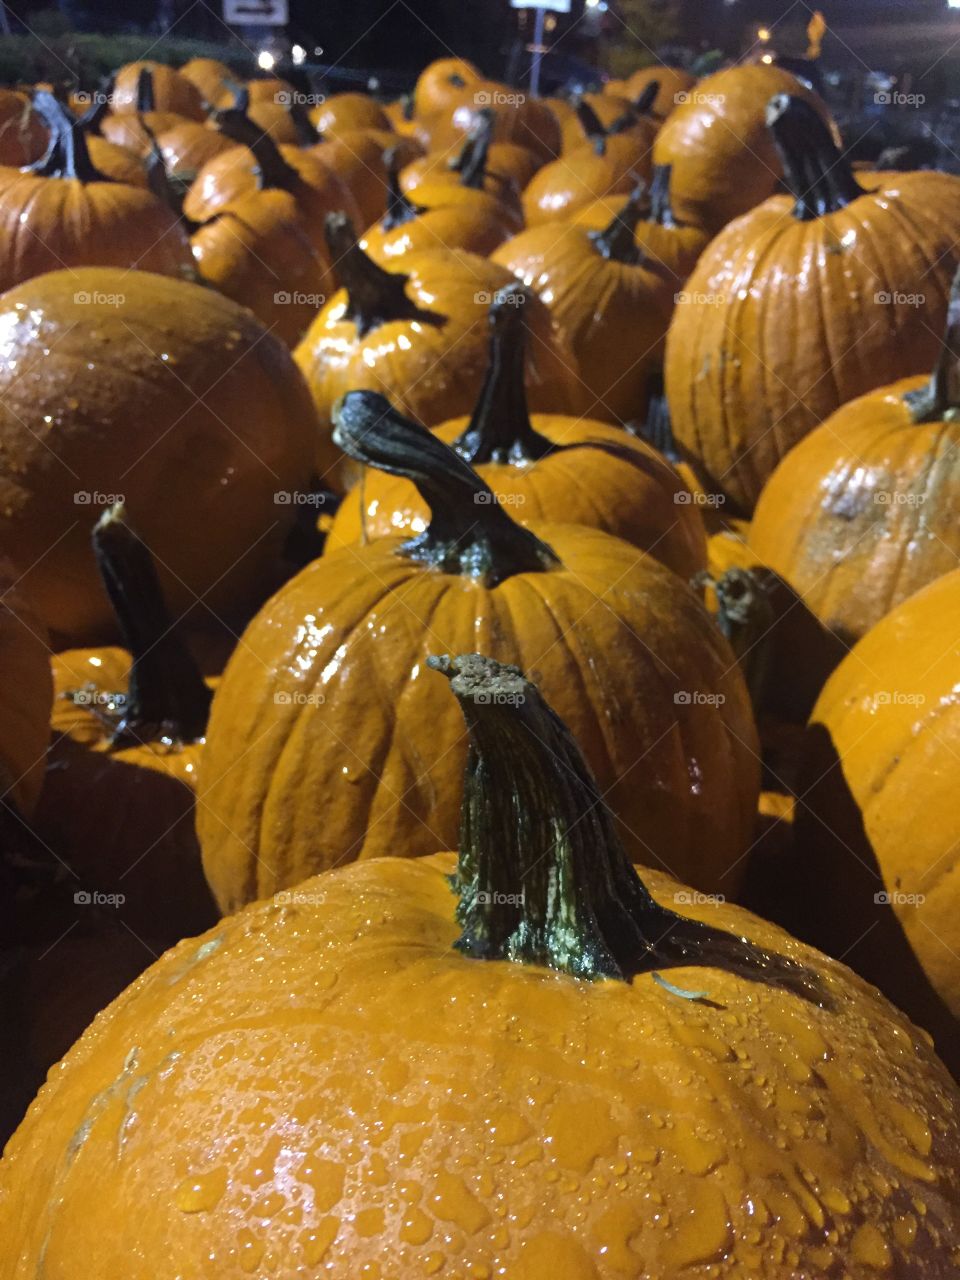 Clsoe-up of wet pumpkins